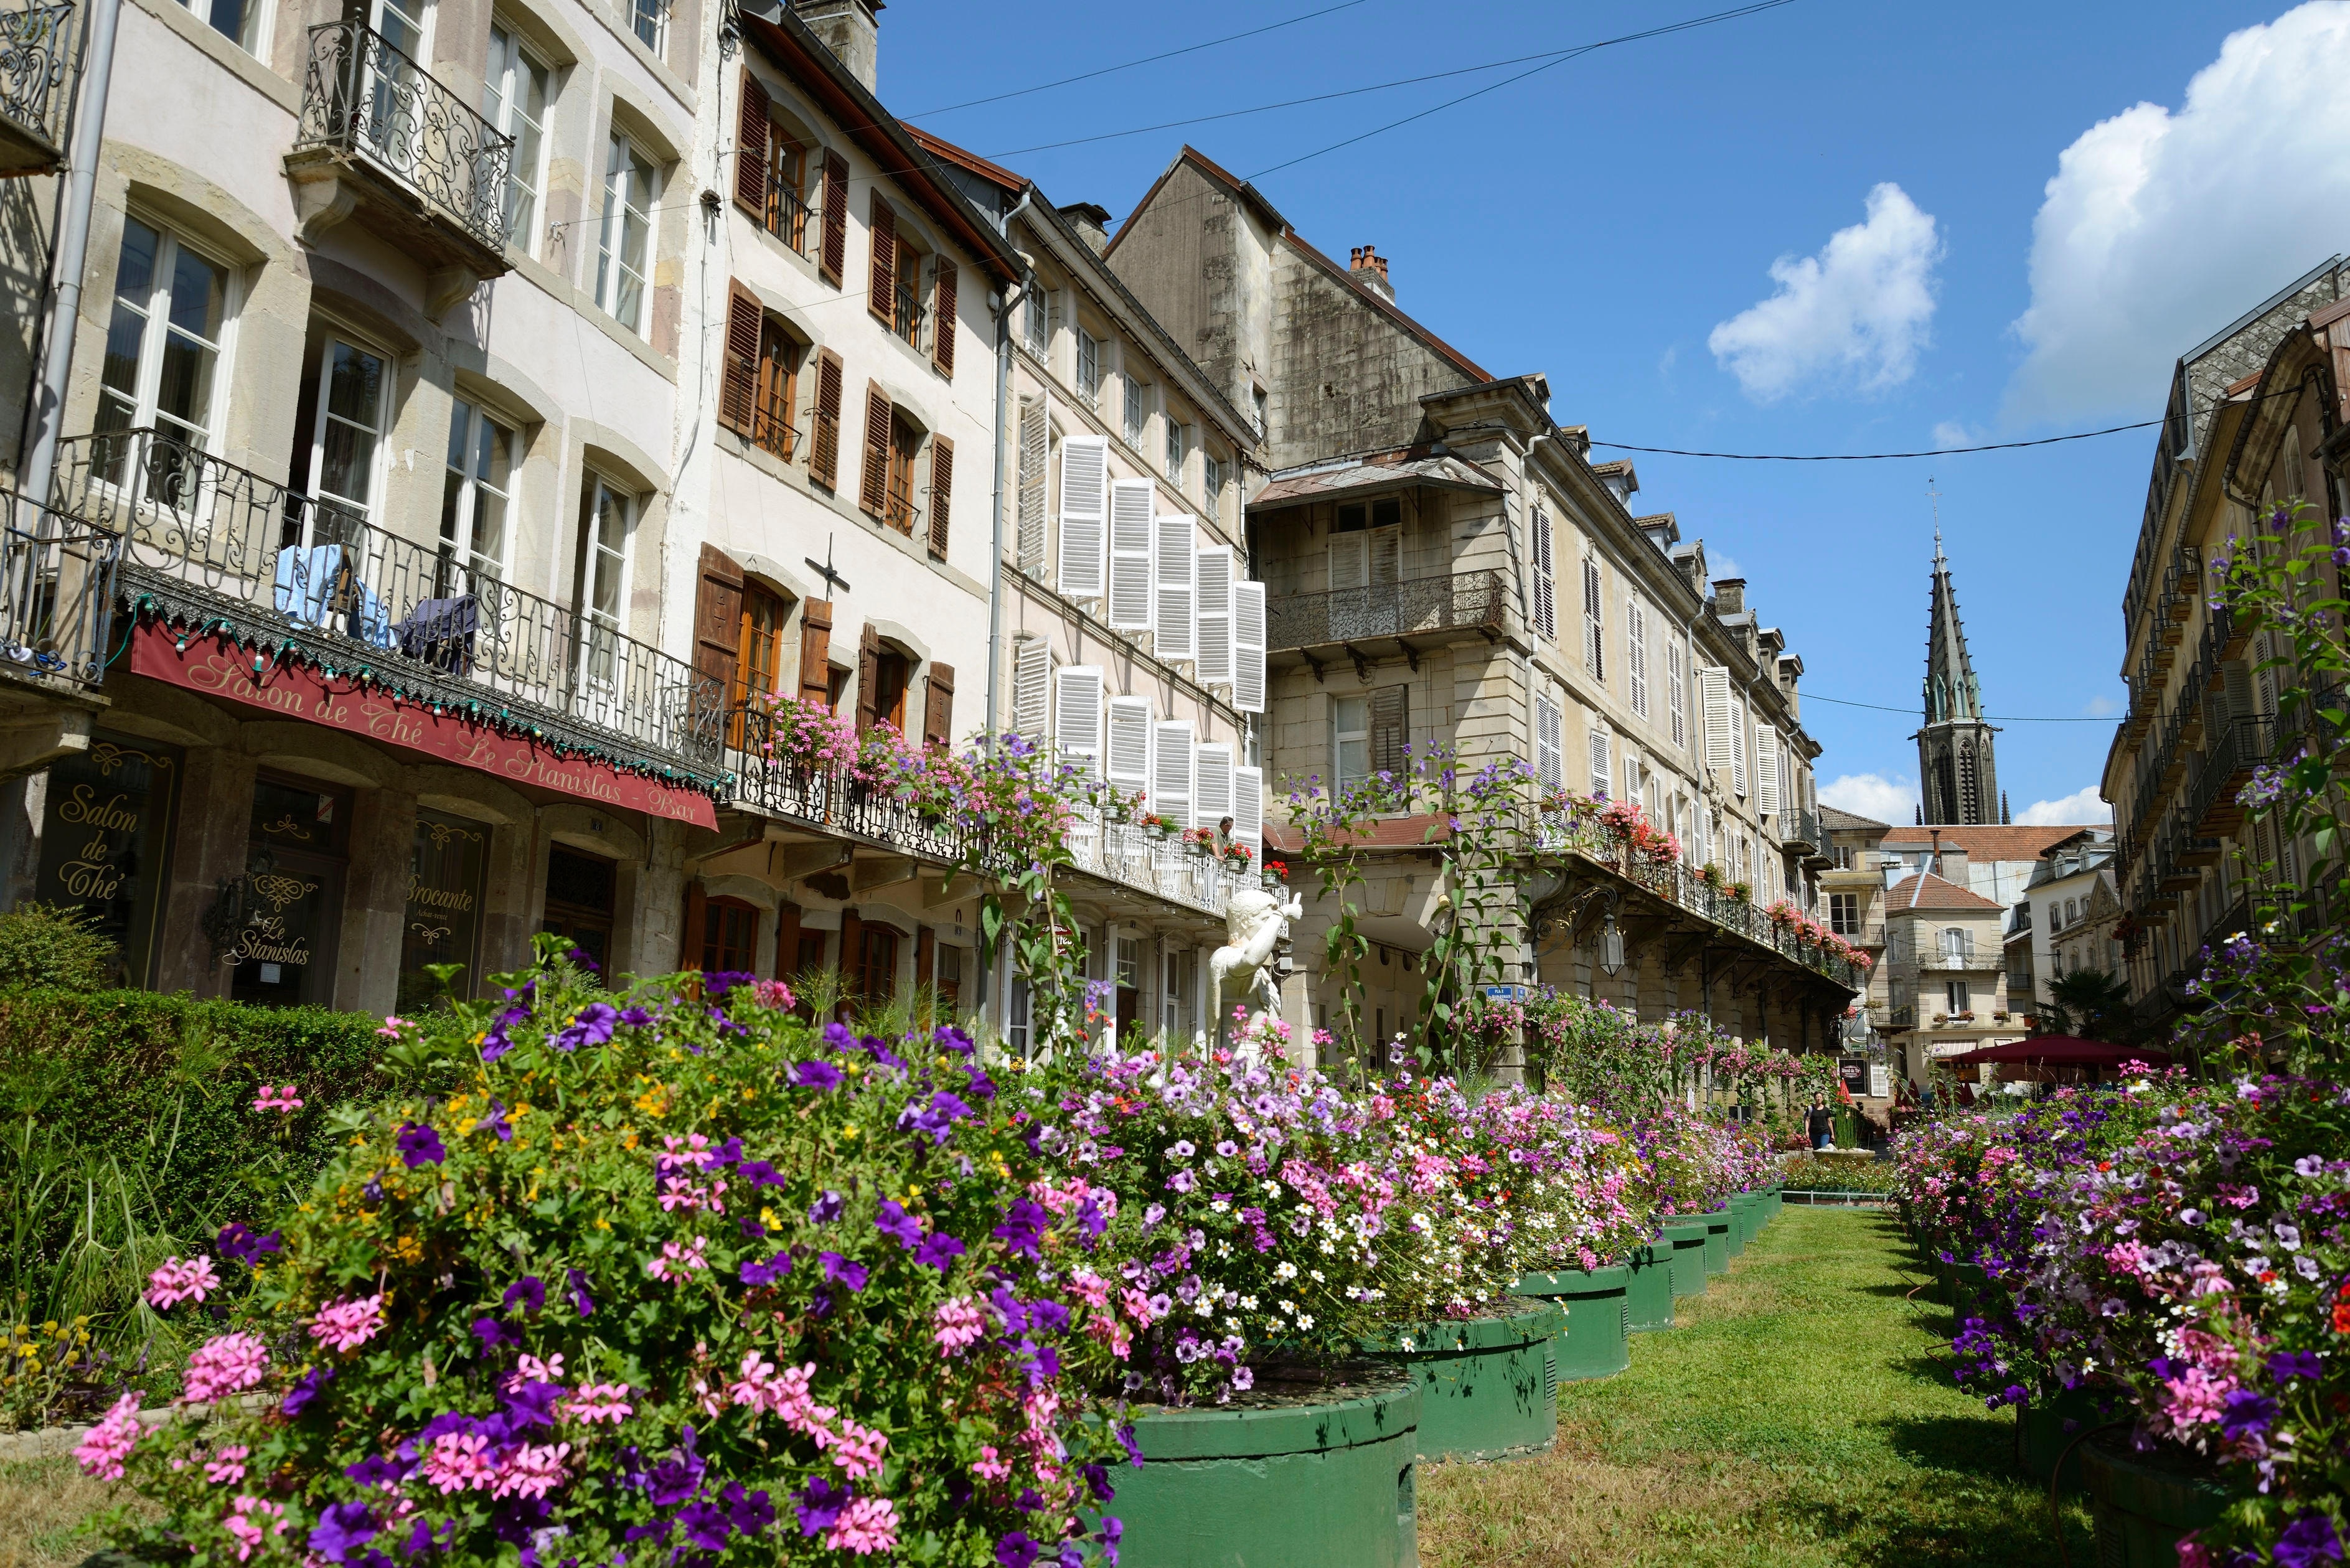 Vosges, France